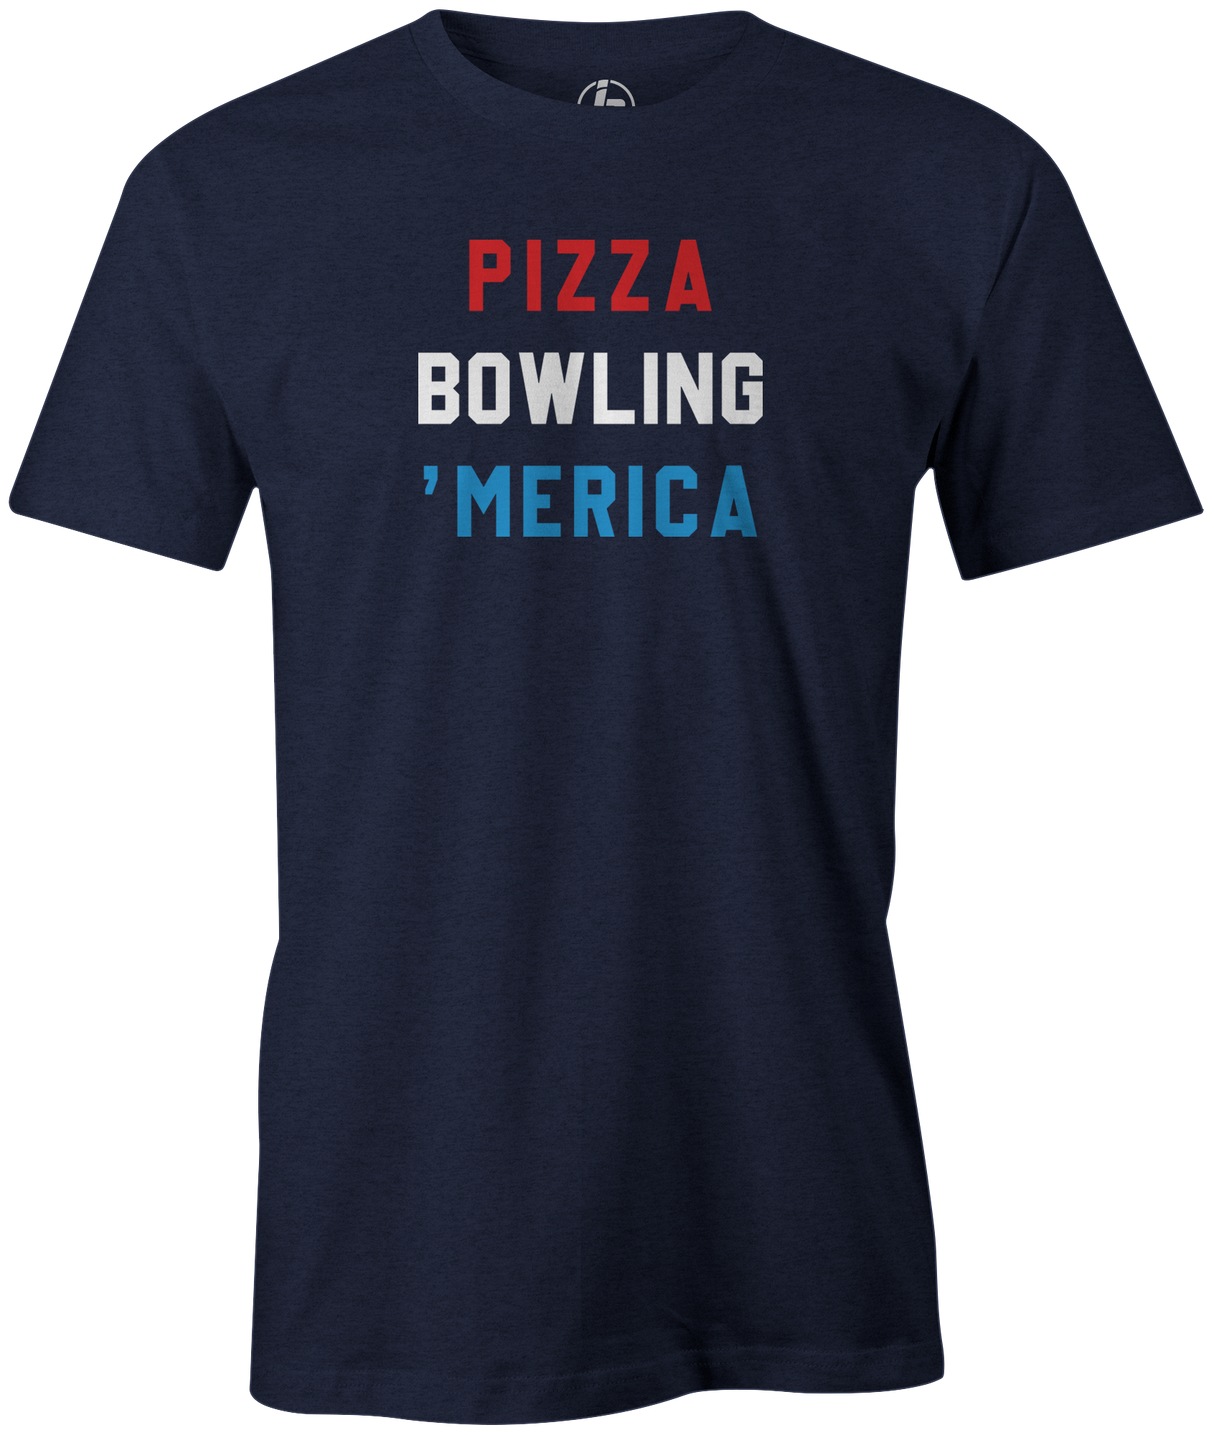 Pizza Bowling 'Merica Men's Bowling shirt, navy, tee, tee-shirt, tee shirt, apparel, merch, cool, funny, vintage, gift, present, cheap, discount, free shipping, lifestlye.